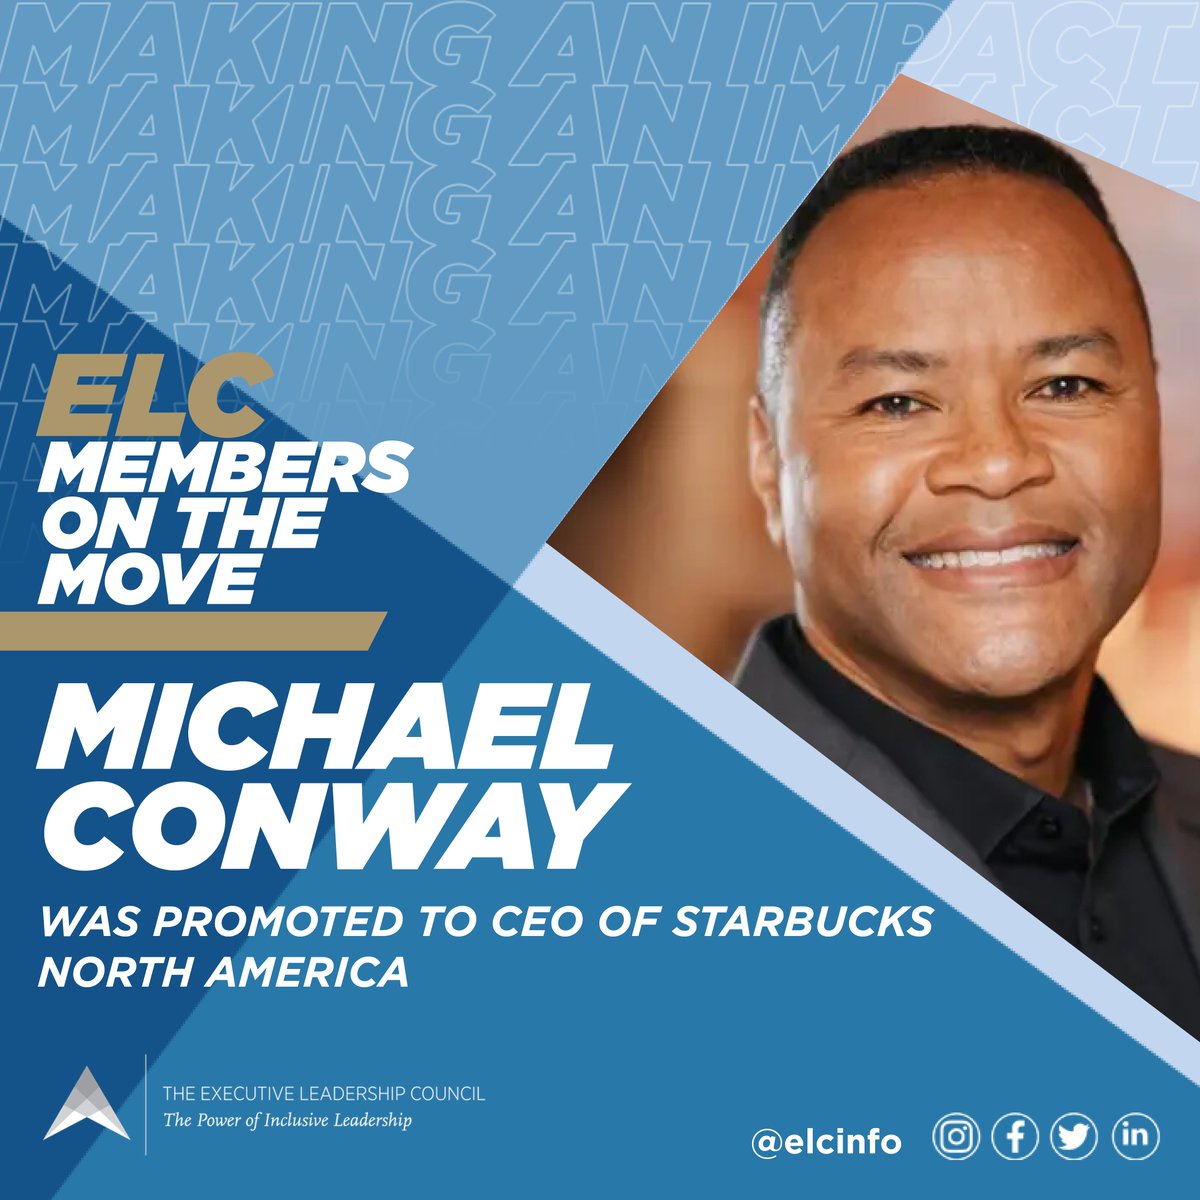 Congratulations to #ELCMember Michael Conway, who was promoted to CEO of @Starbucks North America.

#ELCMembersOnTheMove #BlackMenLead #BlackExecutives #BlackLeadership